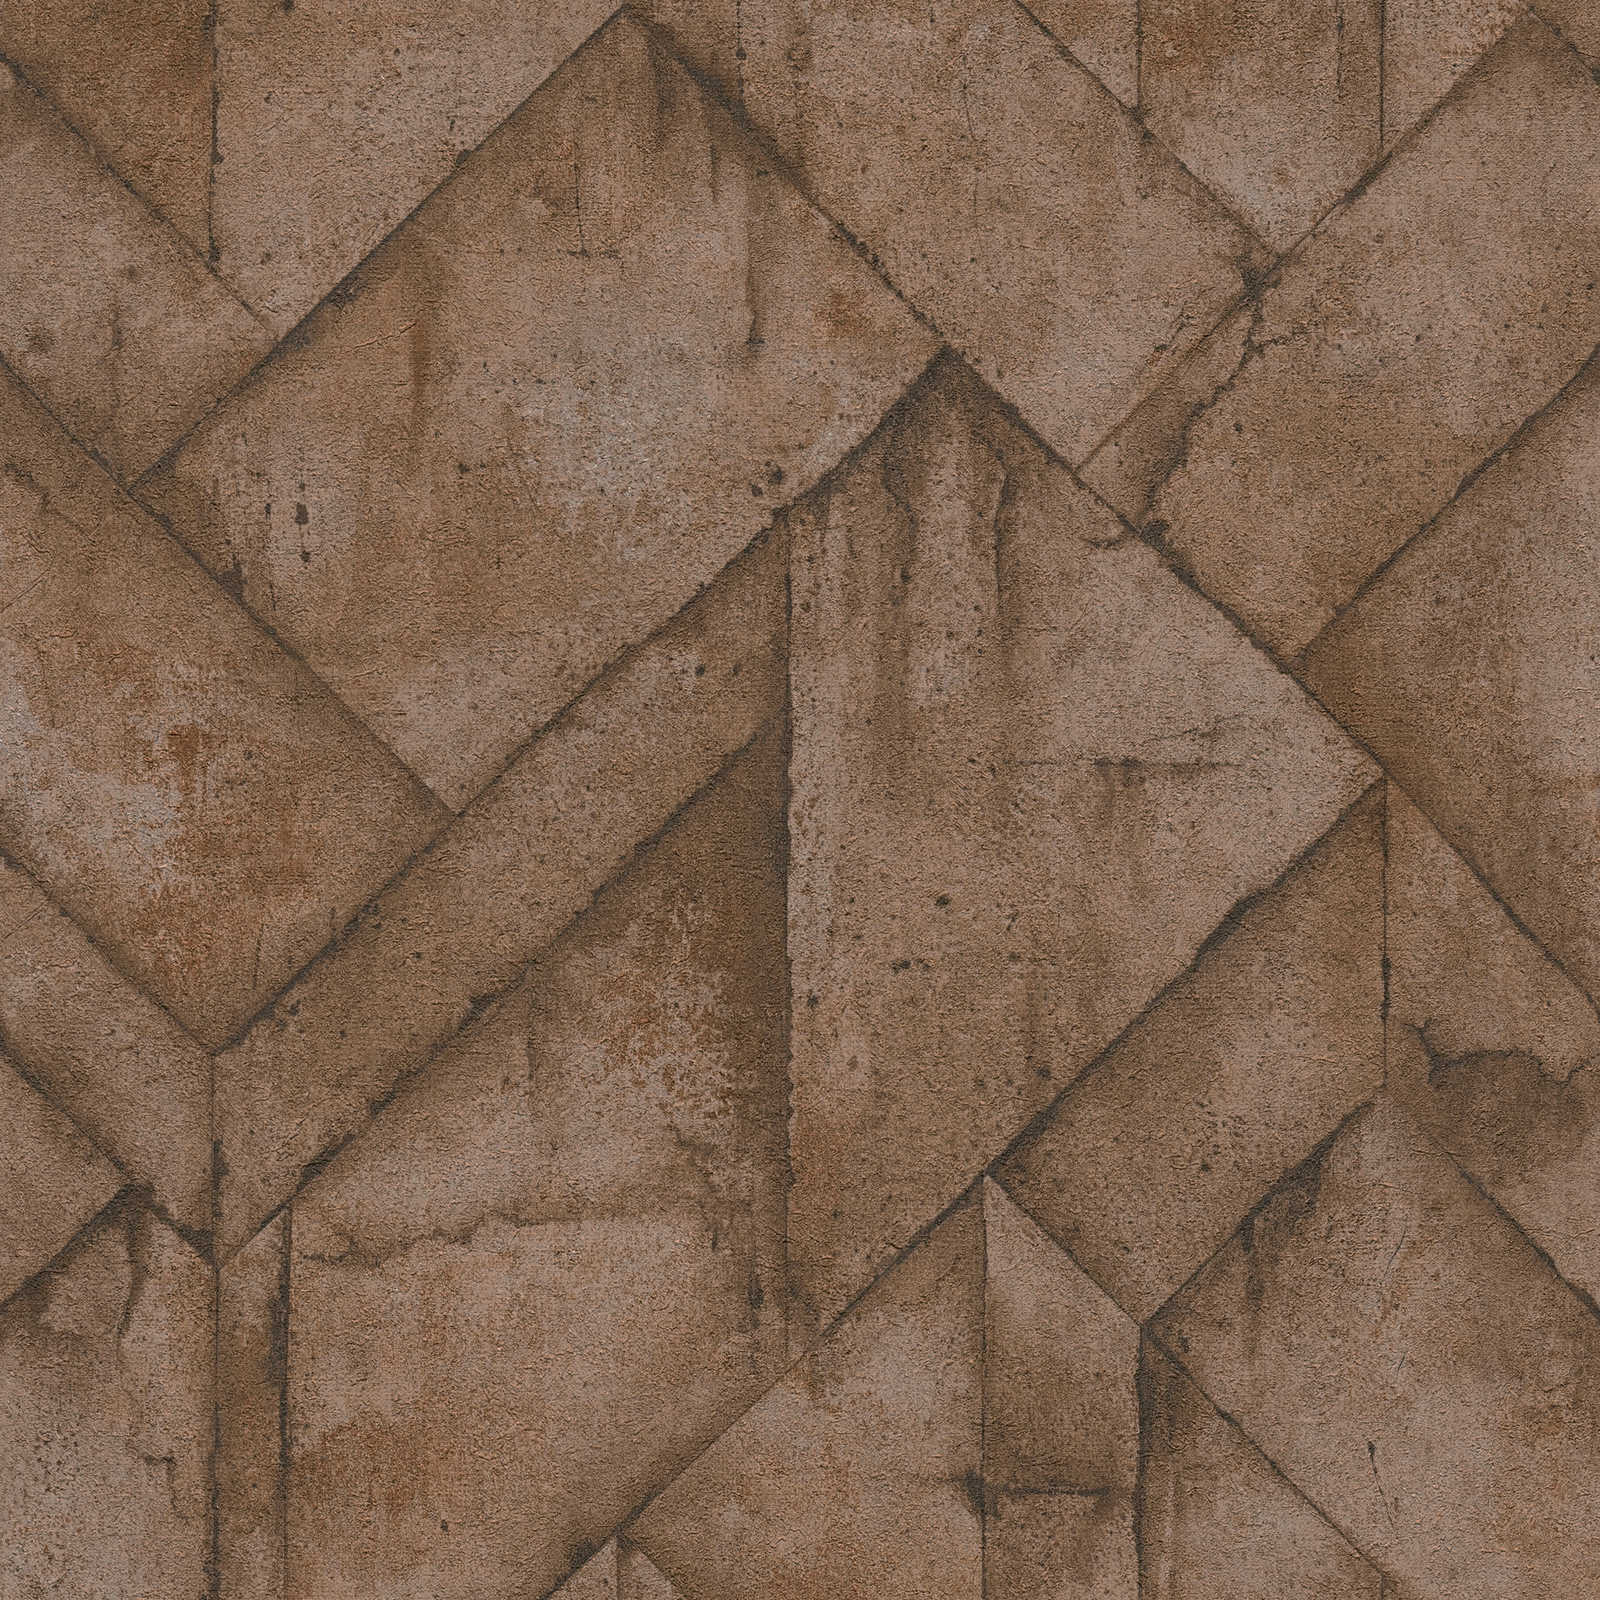 Beton Tapete Geometrie Design & Used Look – Braun, Anthrazit, Orange
